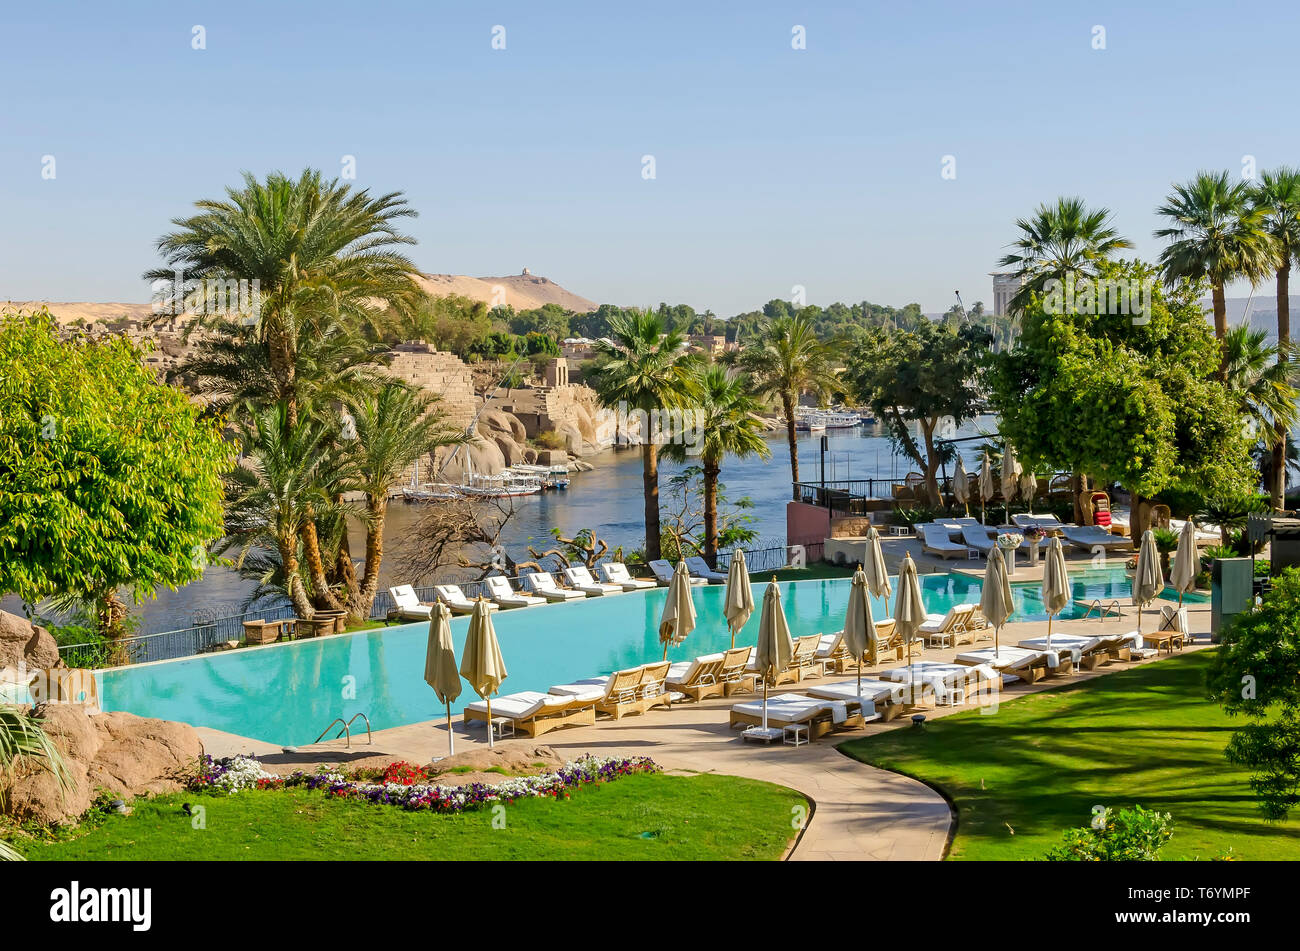 Sofitel Legend Old Cataract Hotel swimming pool overlooking  River Nile, Aswan, Egypt Stock Photo